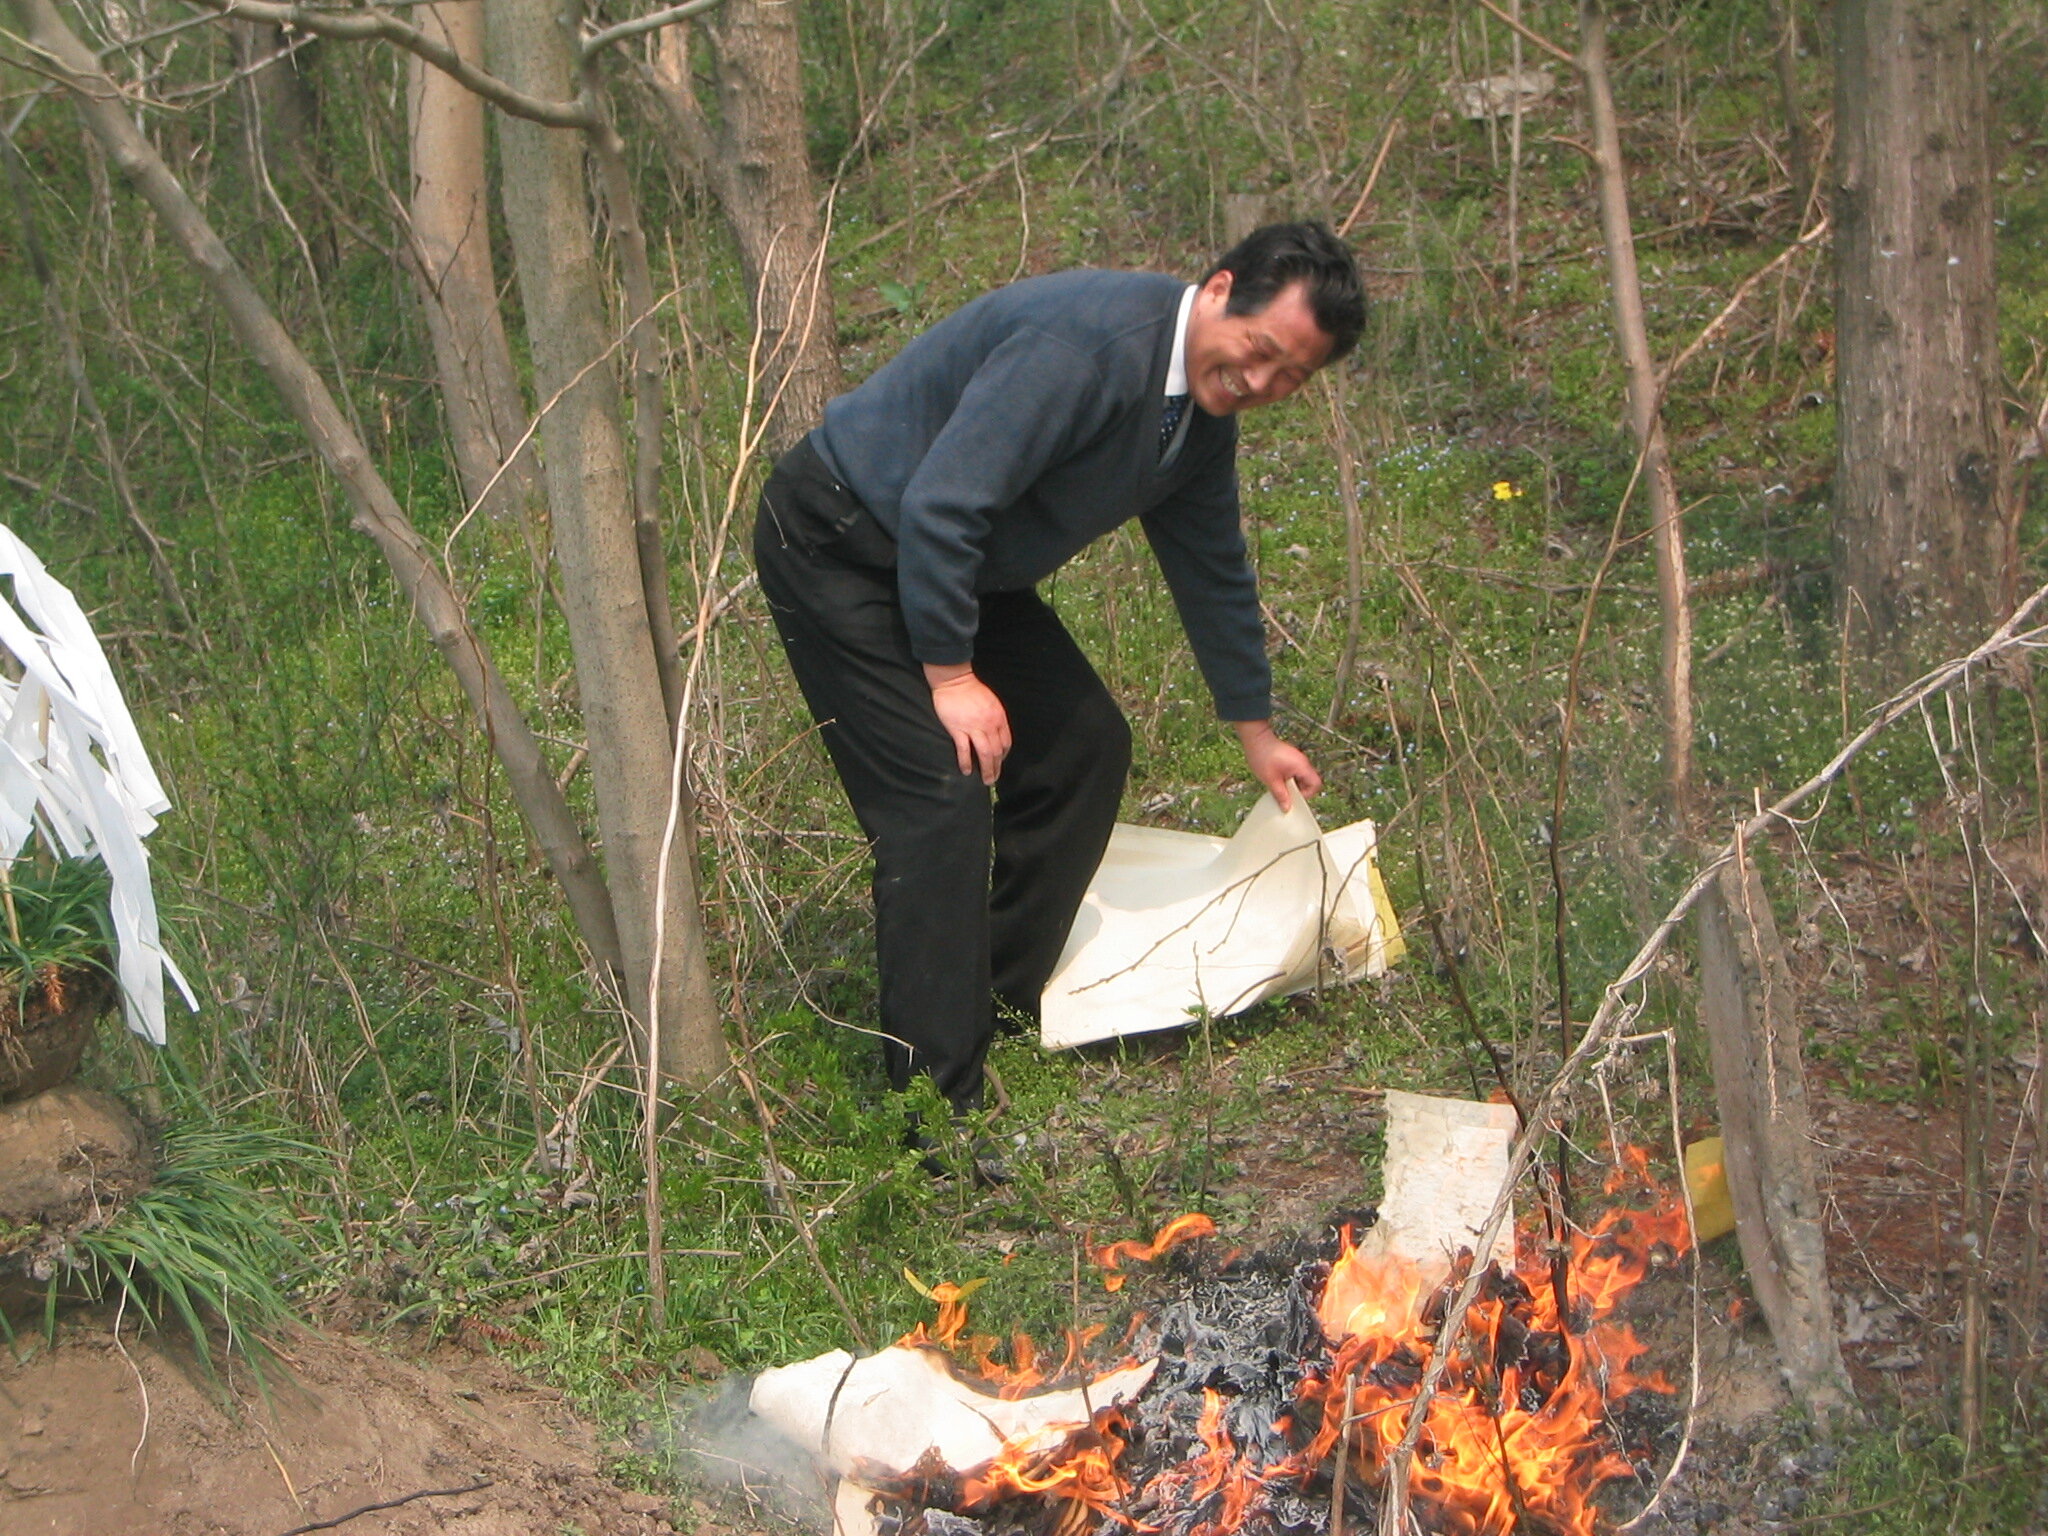  “Book Idiot” Zhou burns paper money for his deceased parents in 2003. 